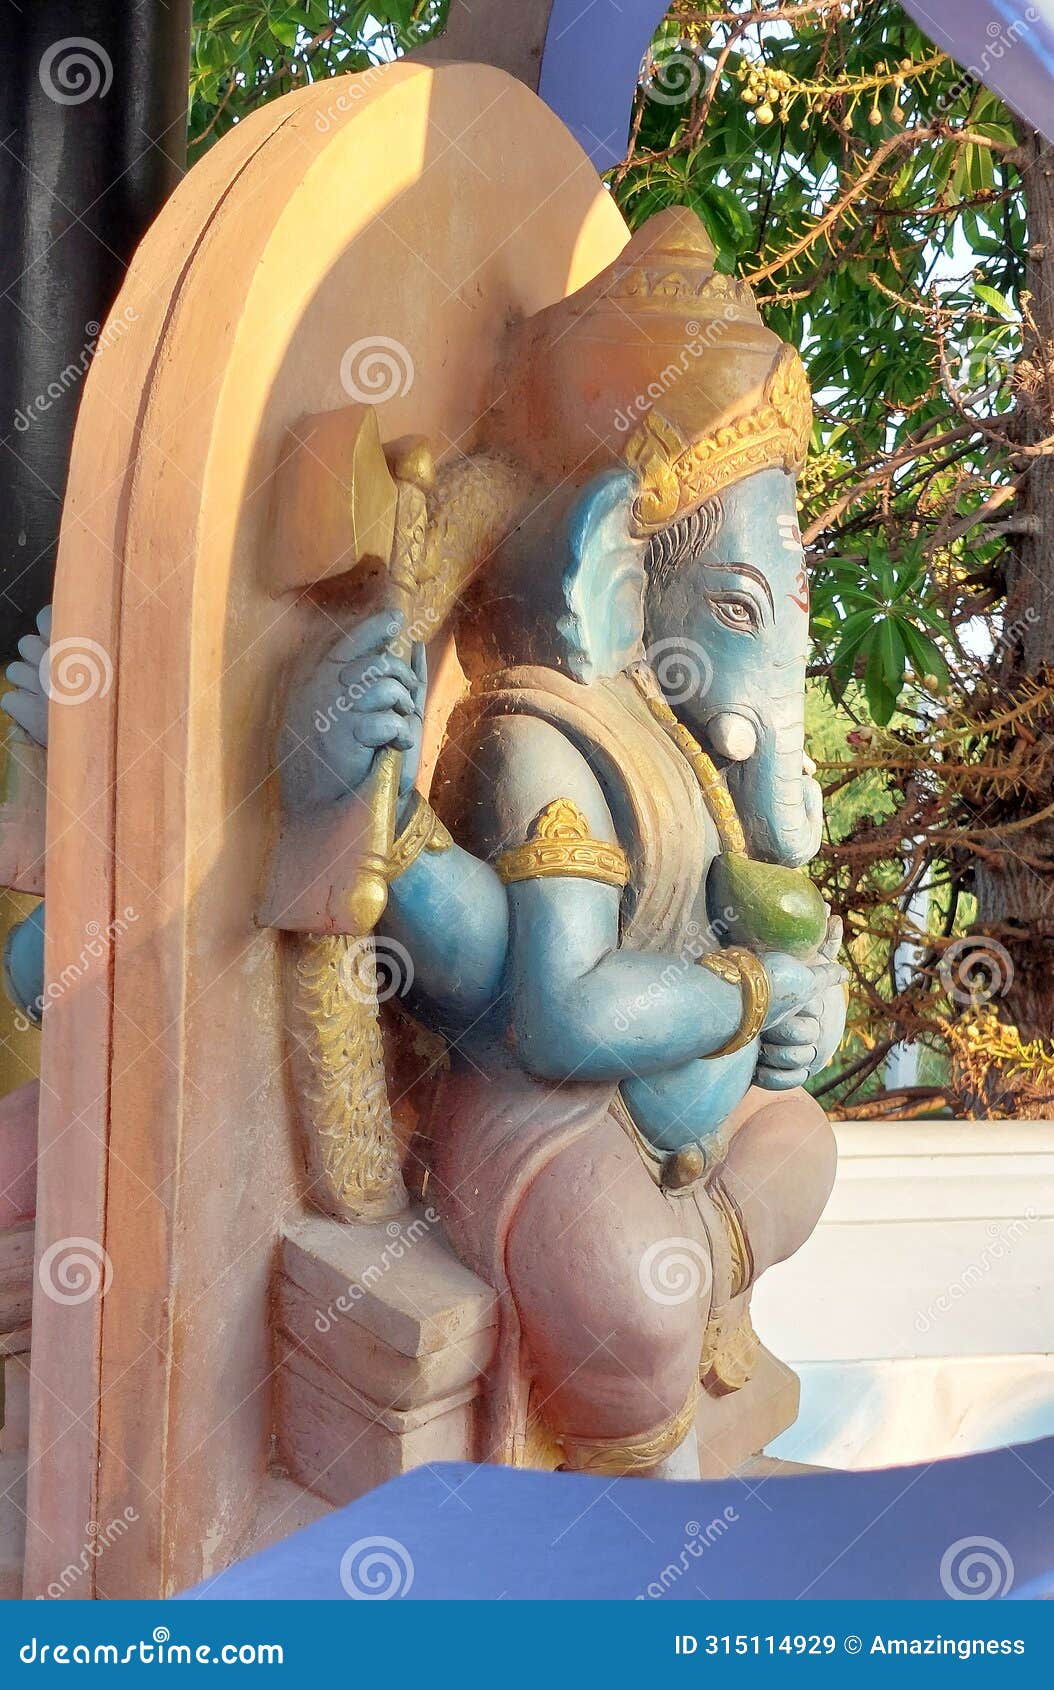 ganesha statue for devotees born on saturday..